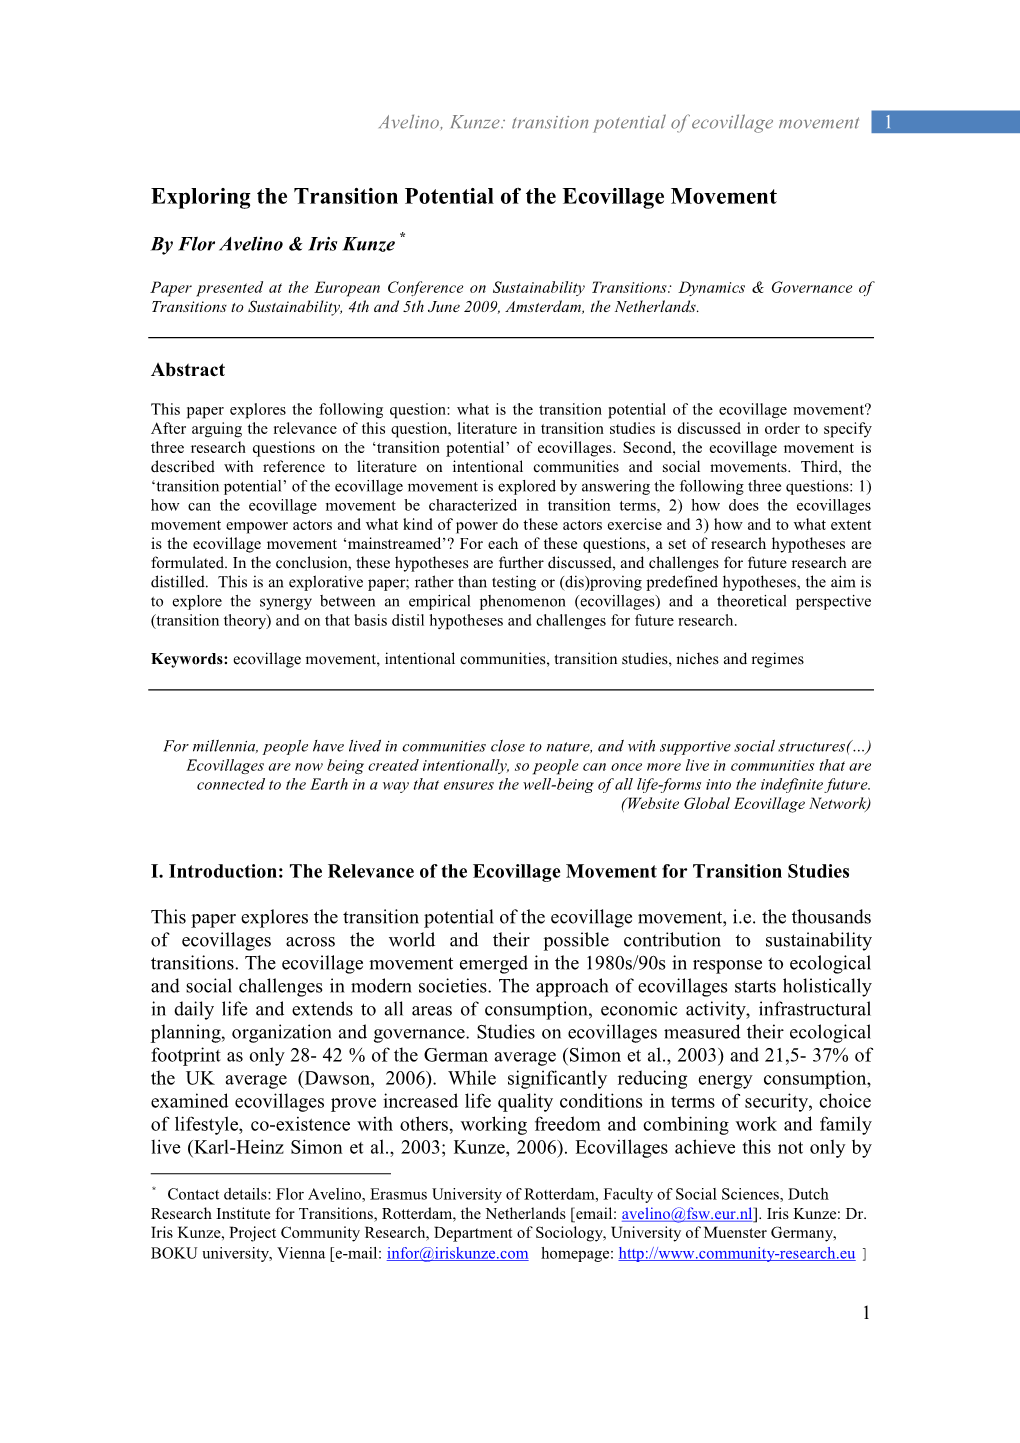 Transition Potential Ecovillages [Avelino & Kunze 2009]